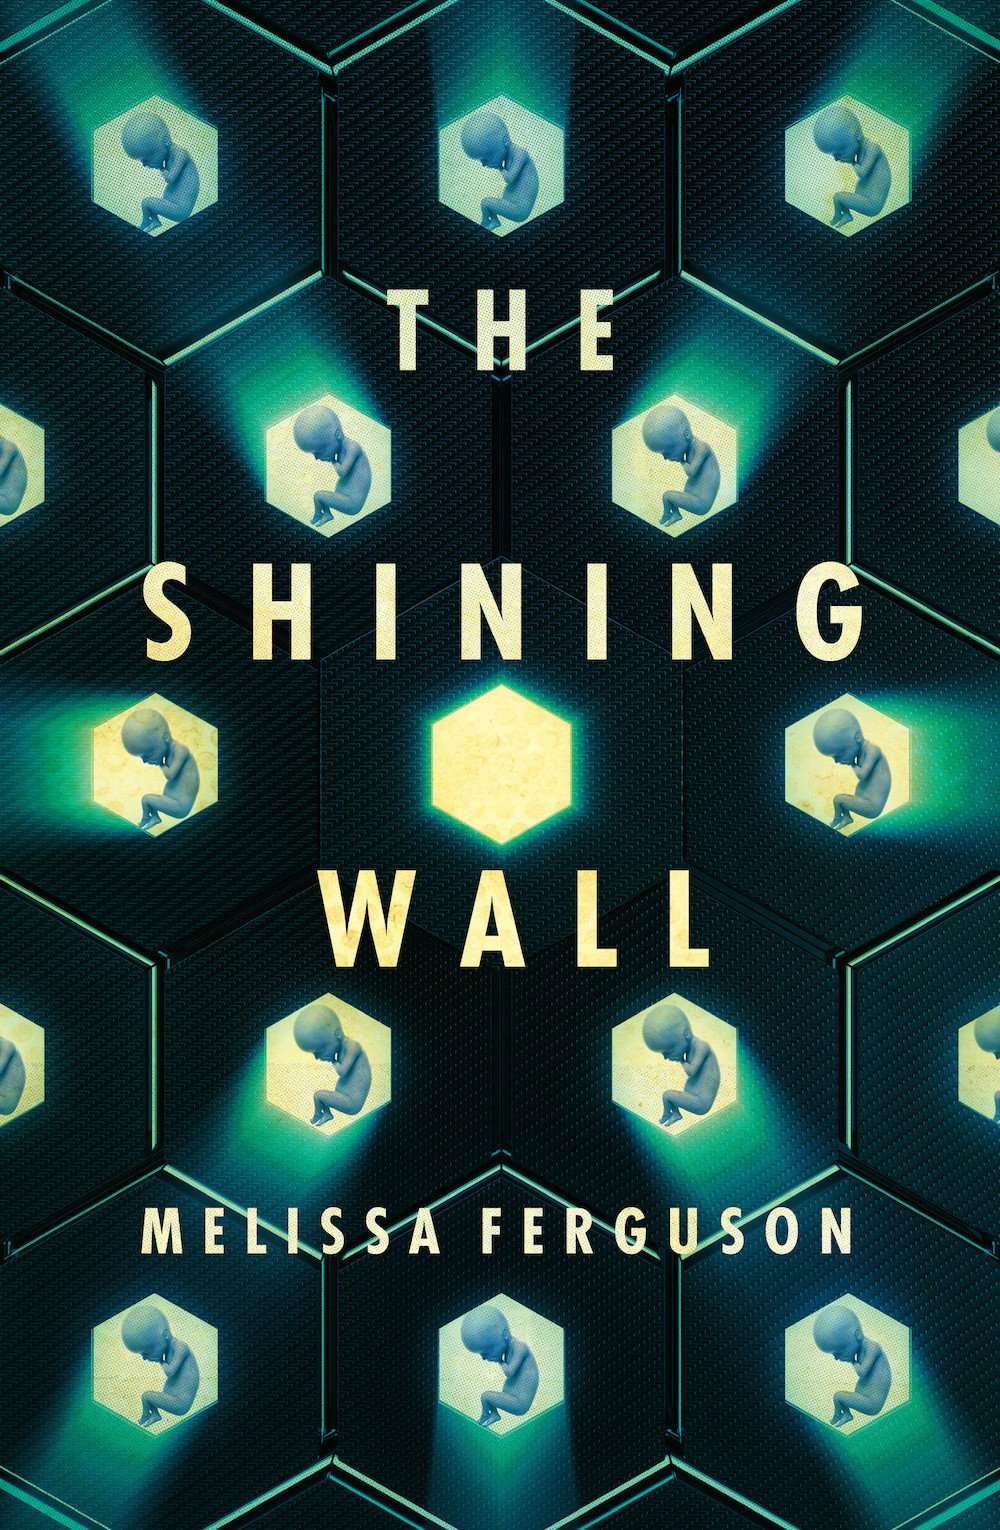 The Shining Wall by Melissa Ferguson